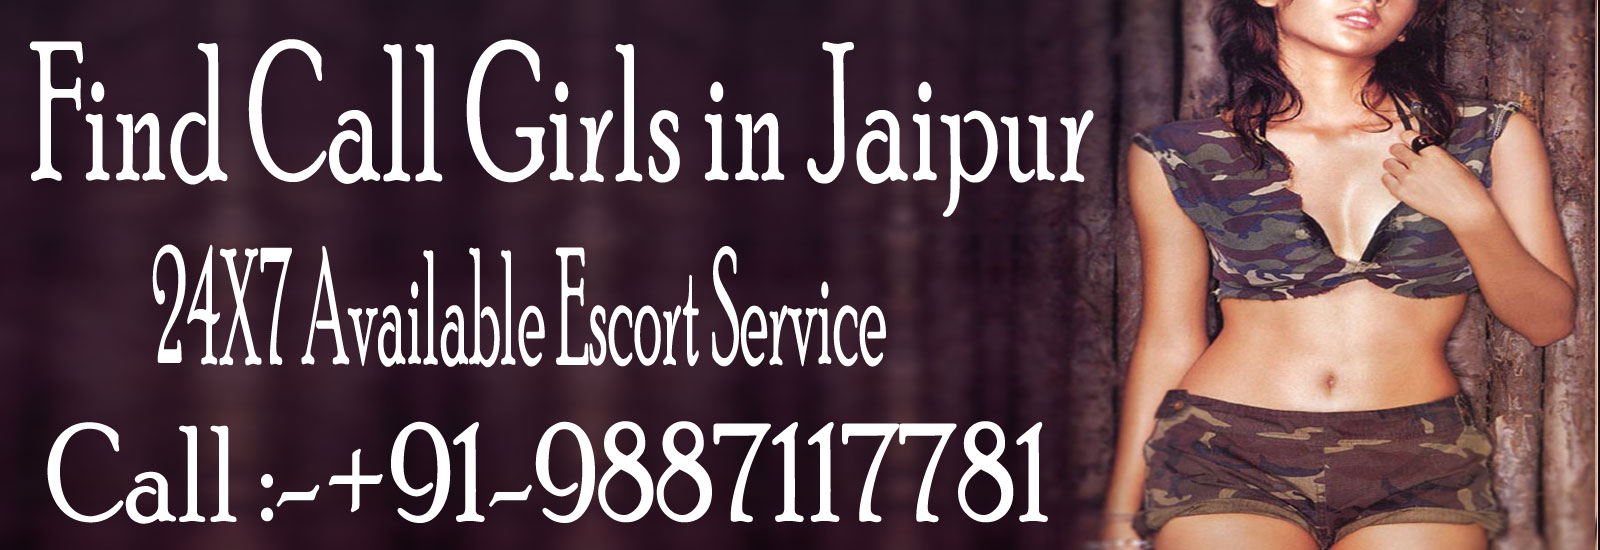 escorts Services in Jaipur